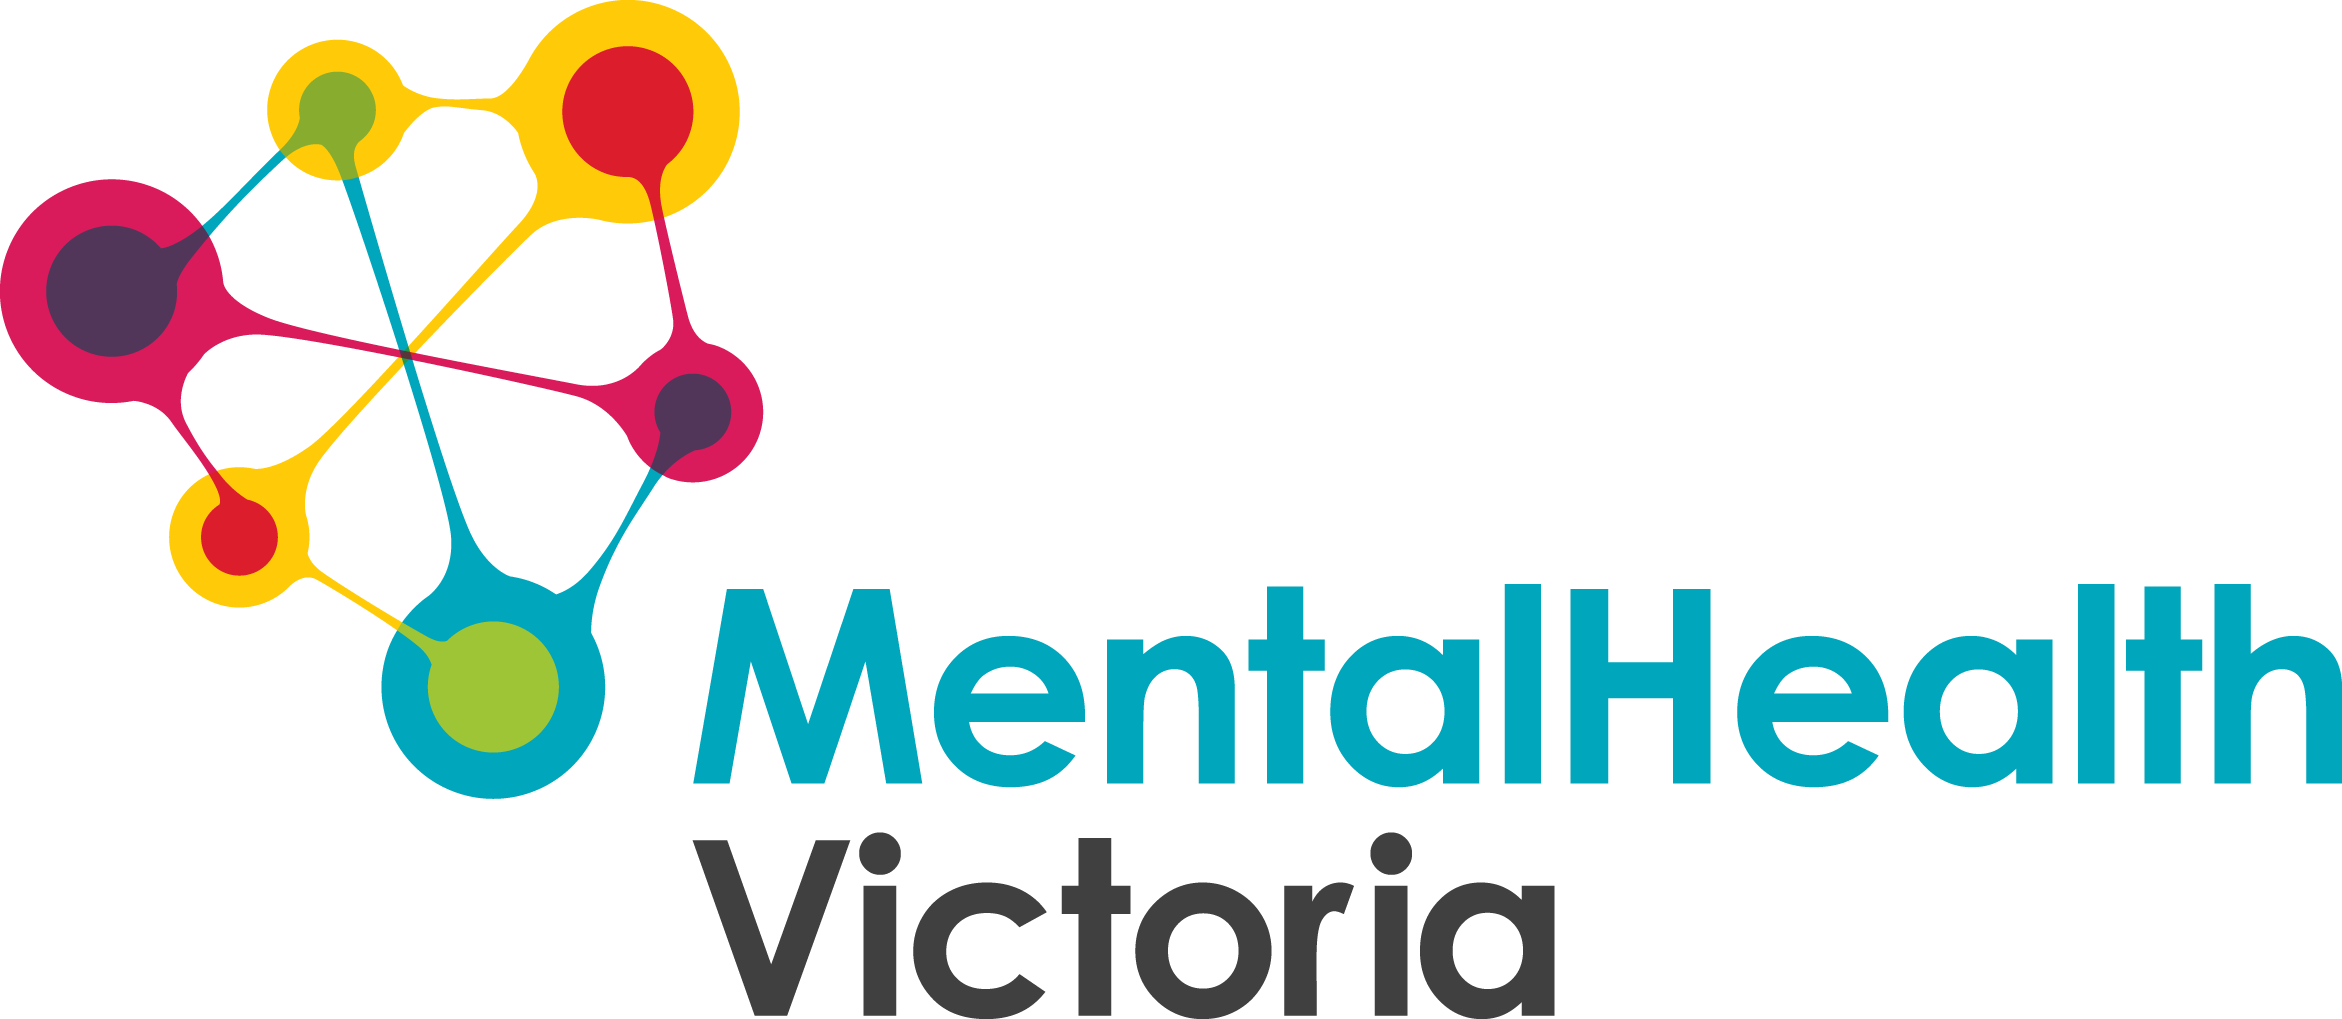 Mental Health Victoria Landscape Logo RGB No Tagline